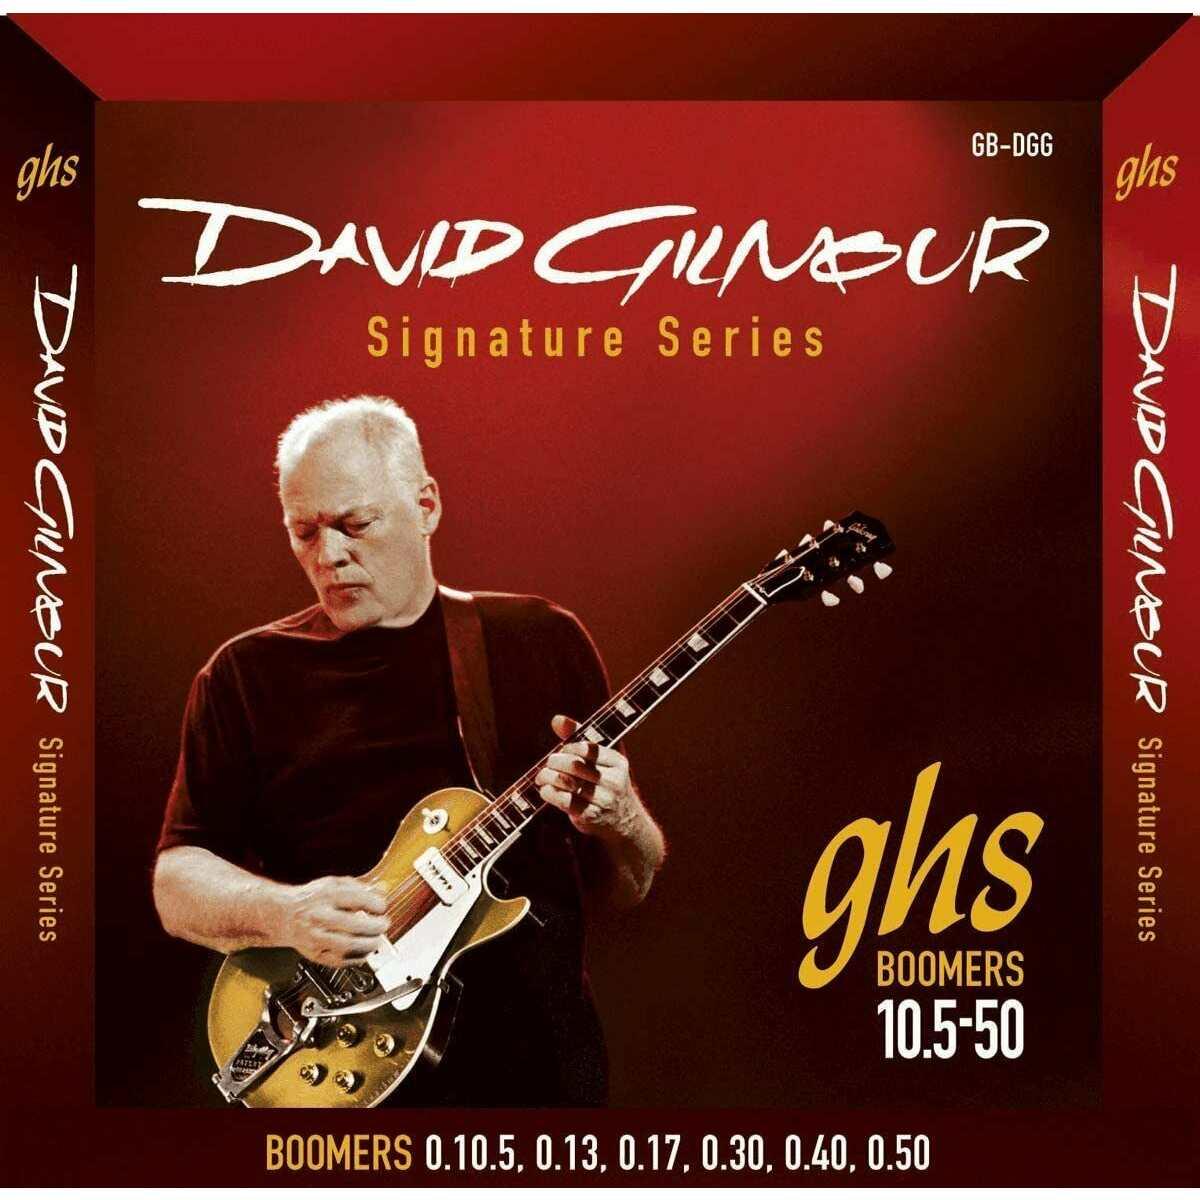 Ghs david gilmour gb-dgg set corde chitarra elettrica